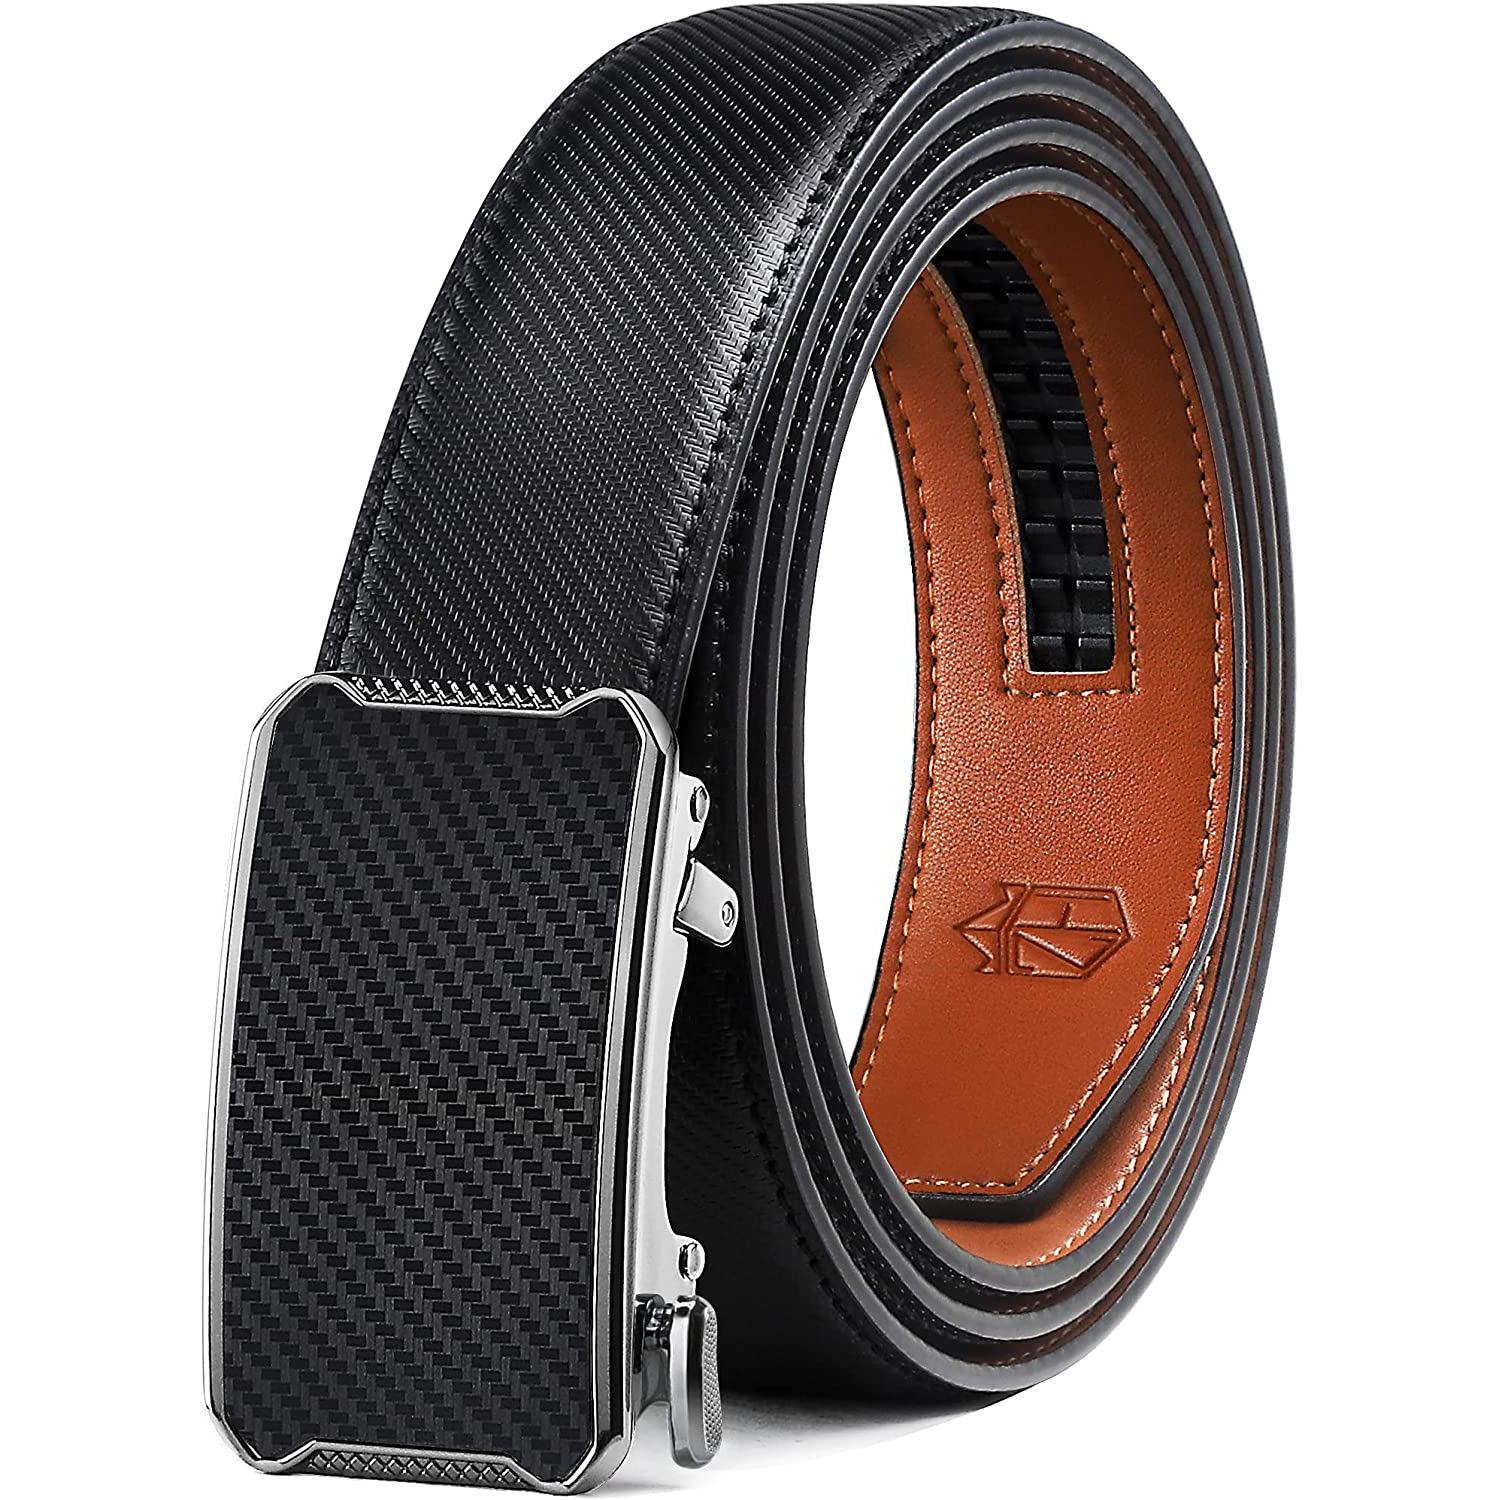 Zitahli Leather Mens Belt for $9.51